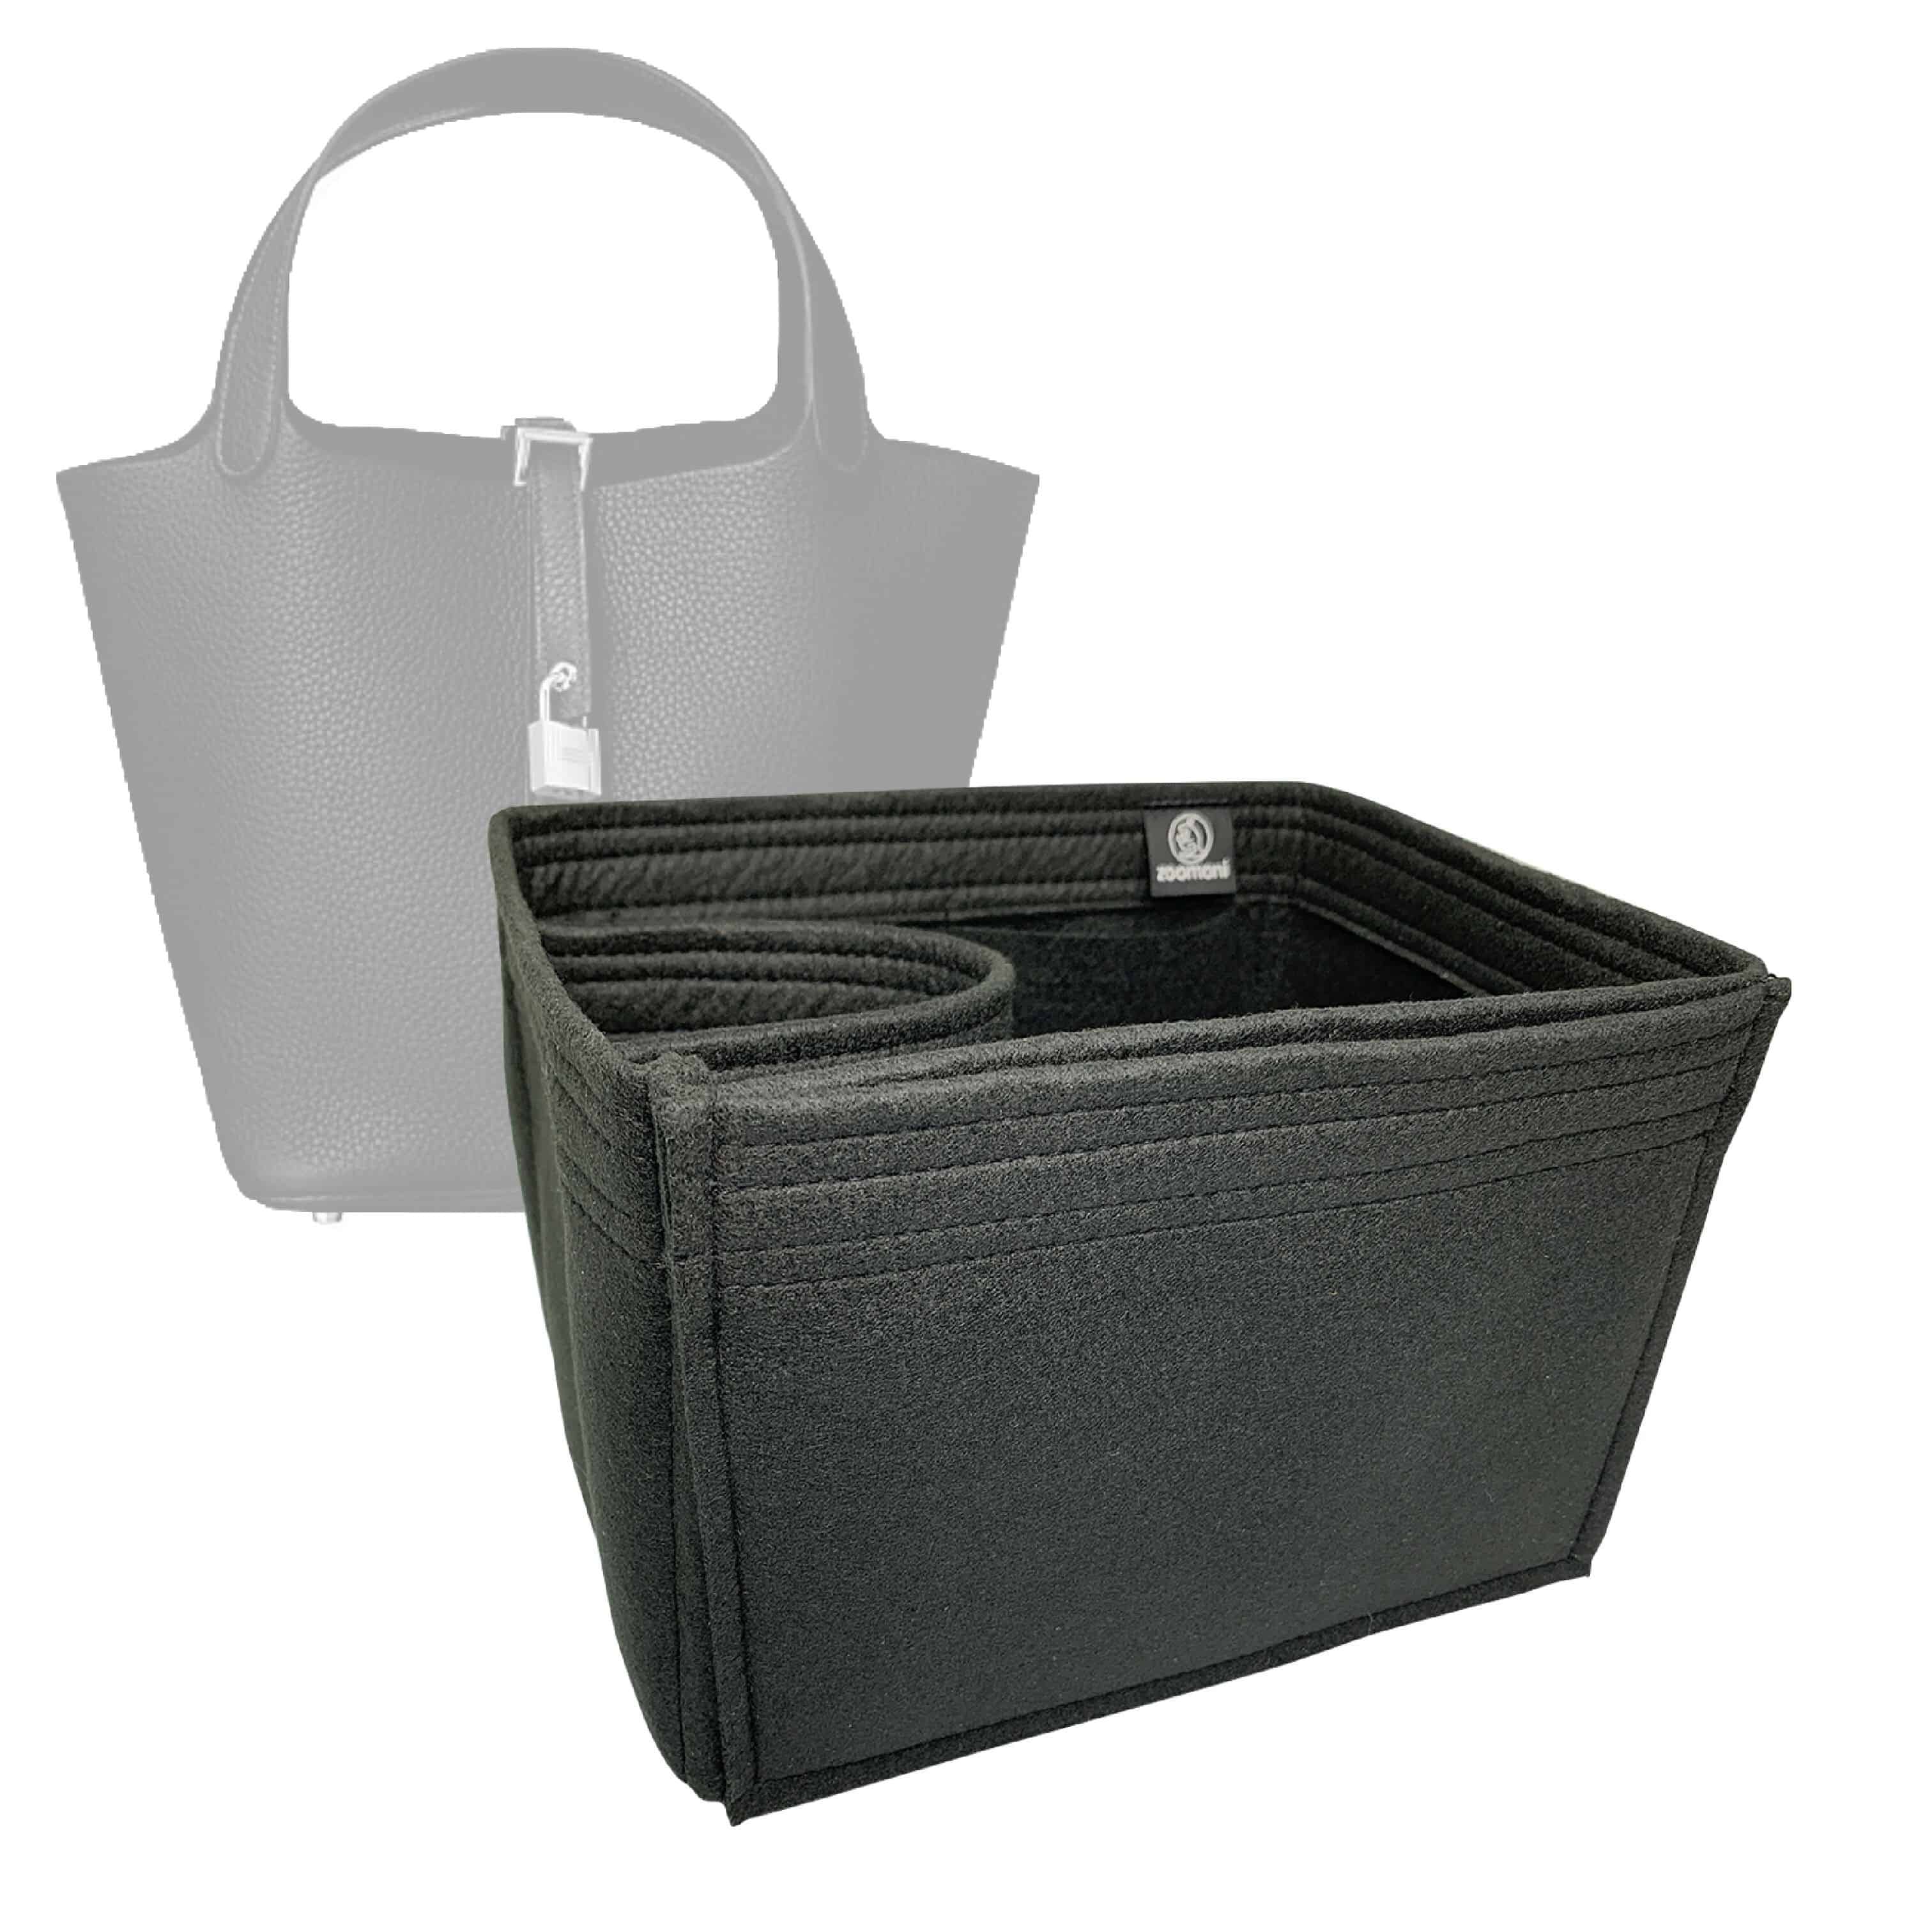 Bag and Purse Organizer with Basic Style for Hermes Picotin 18, Picotin 22  and Picotin 26